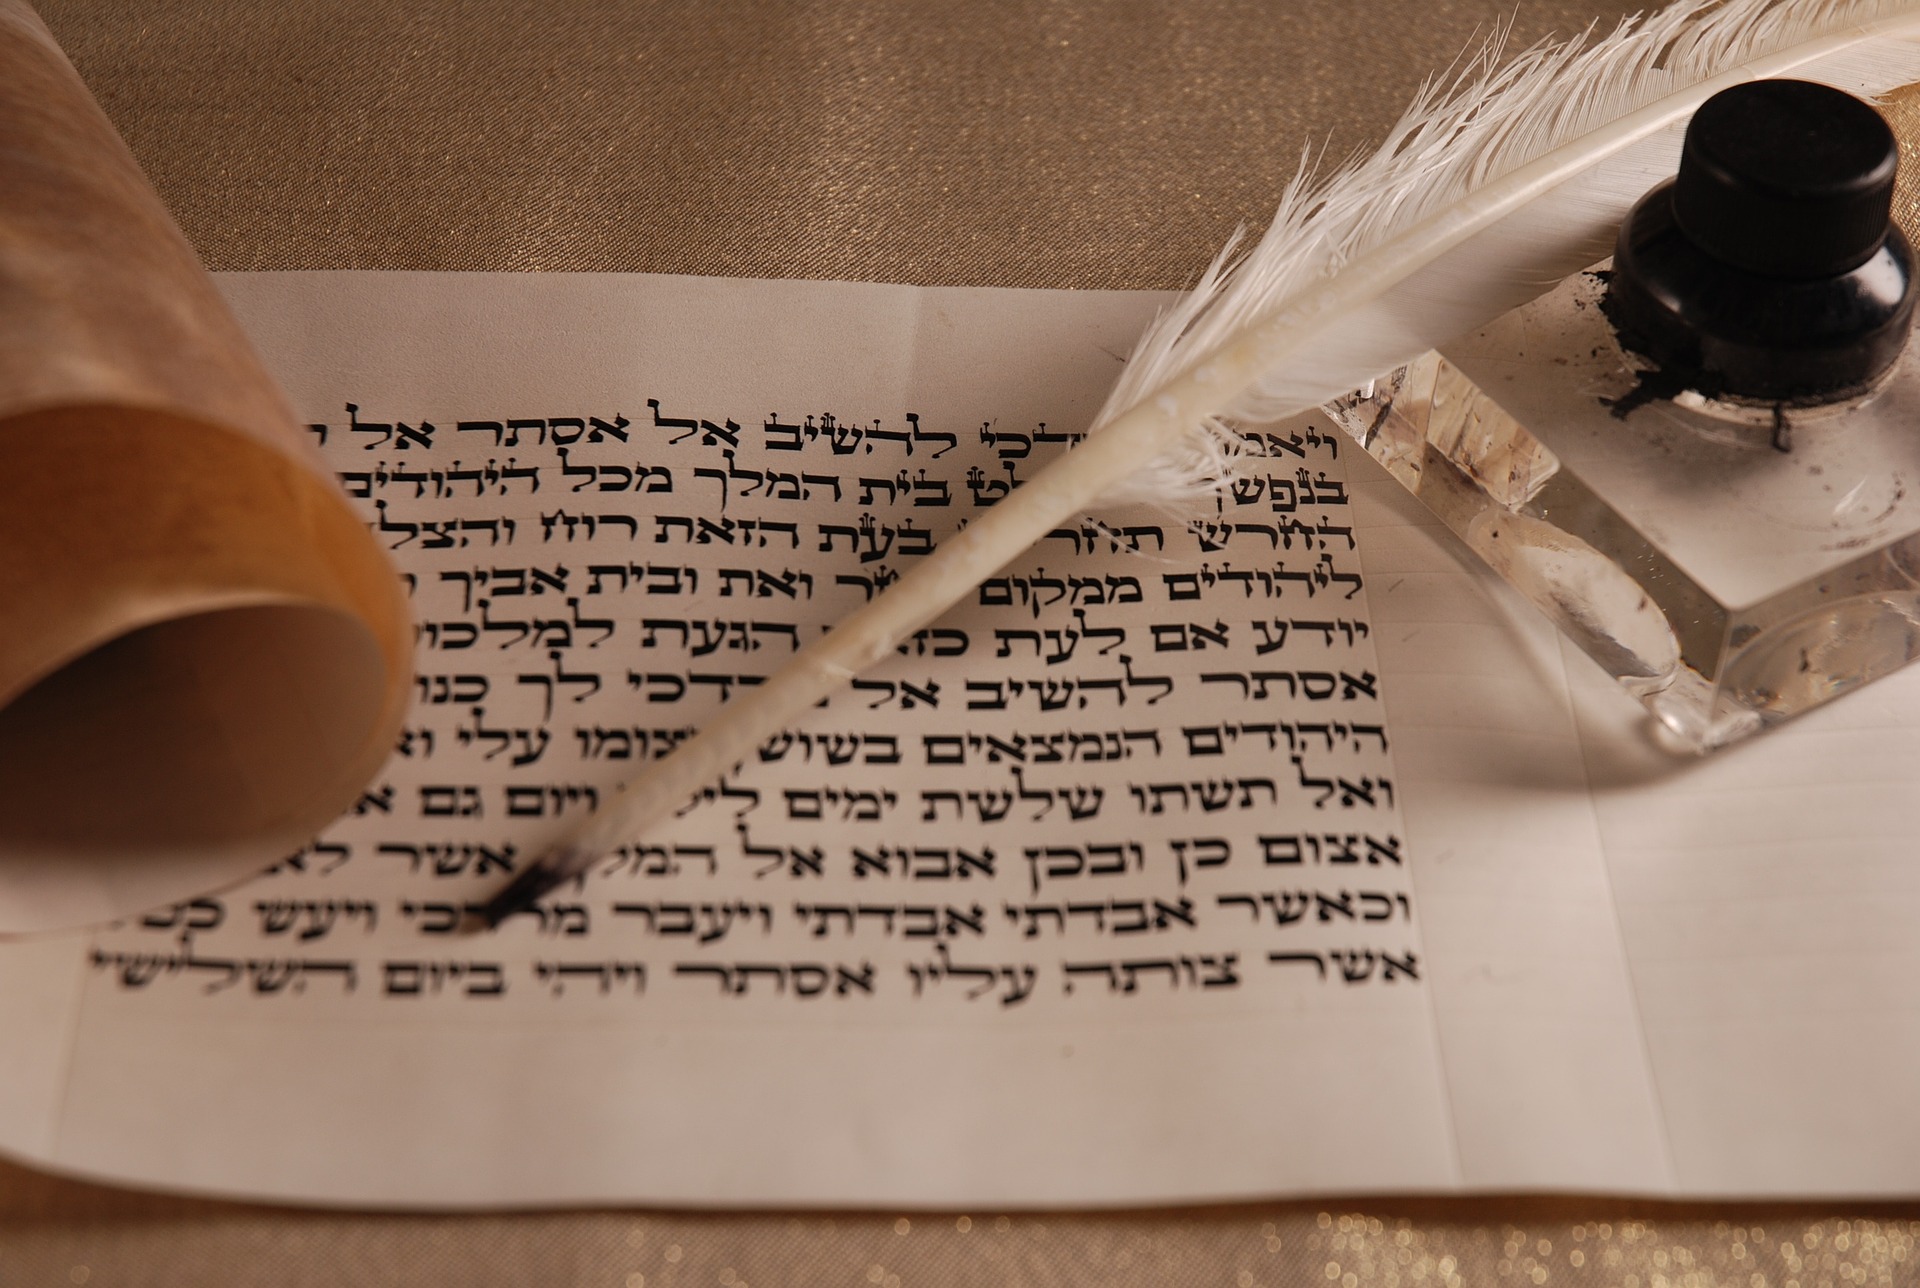 Hebrew language writing